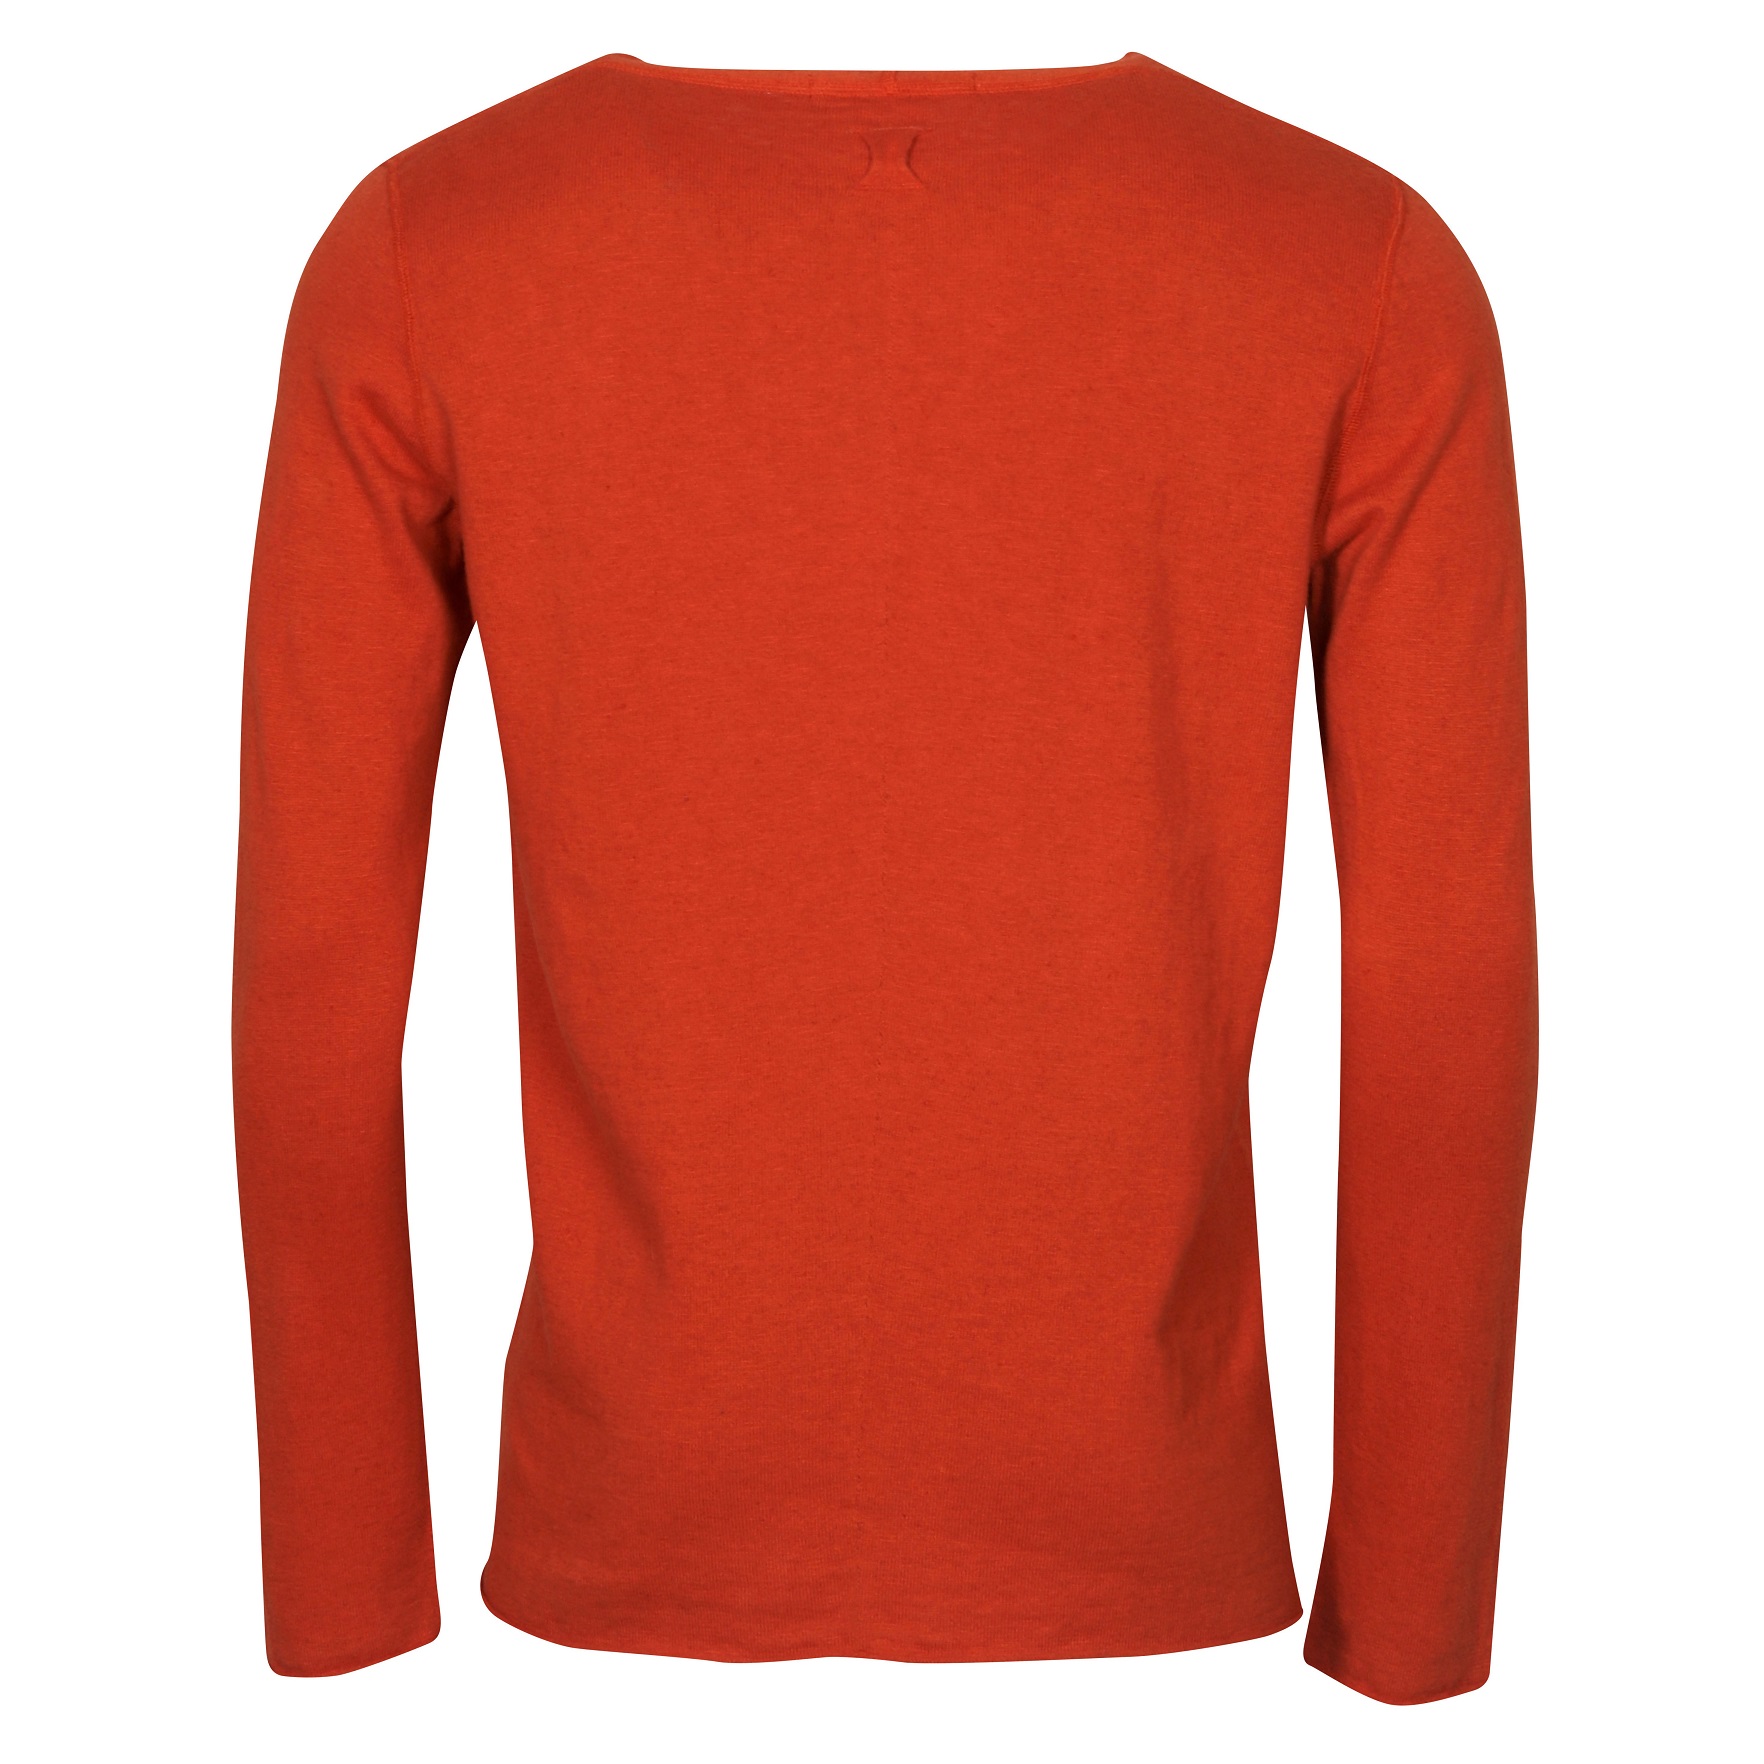 HANNES ROETHER Knit Sweater in Orange